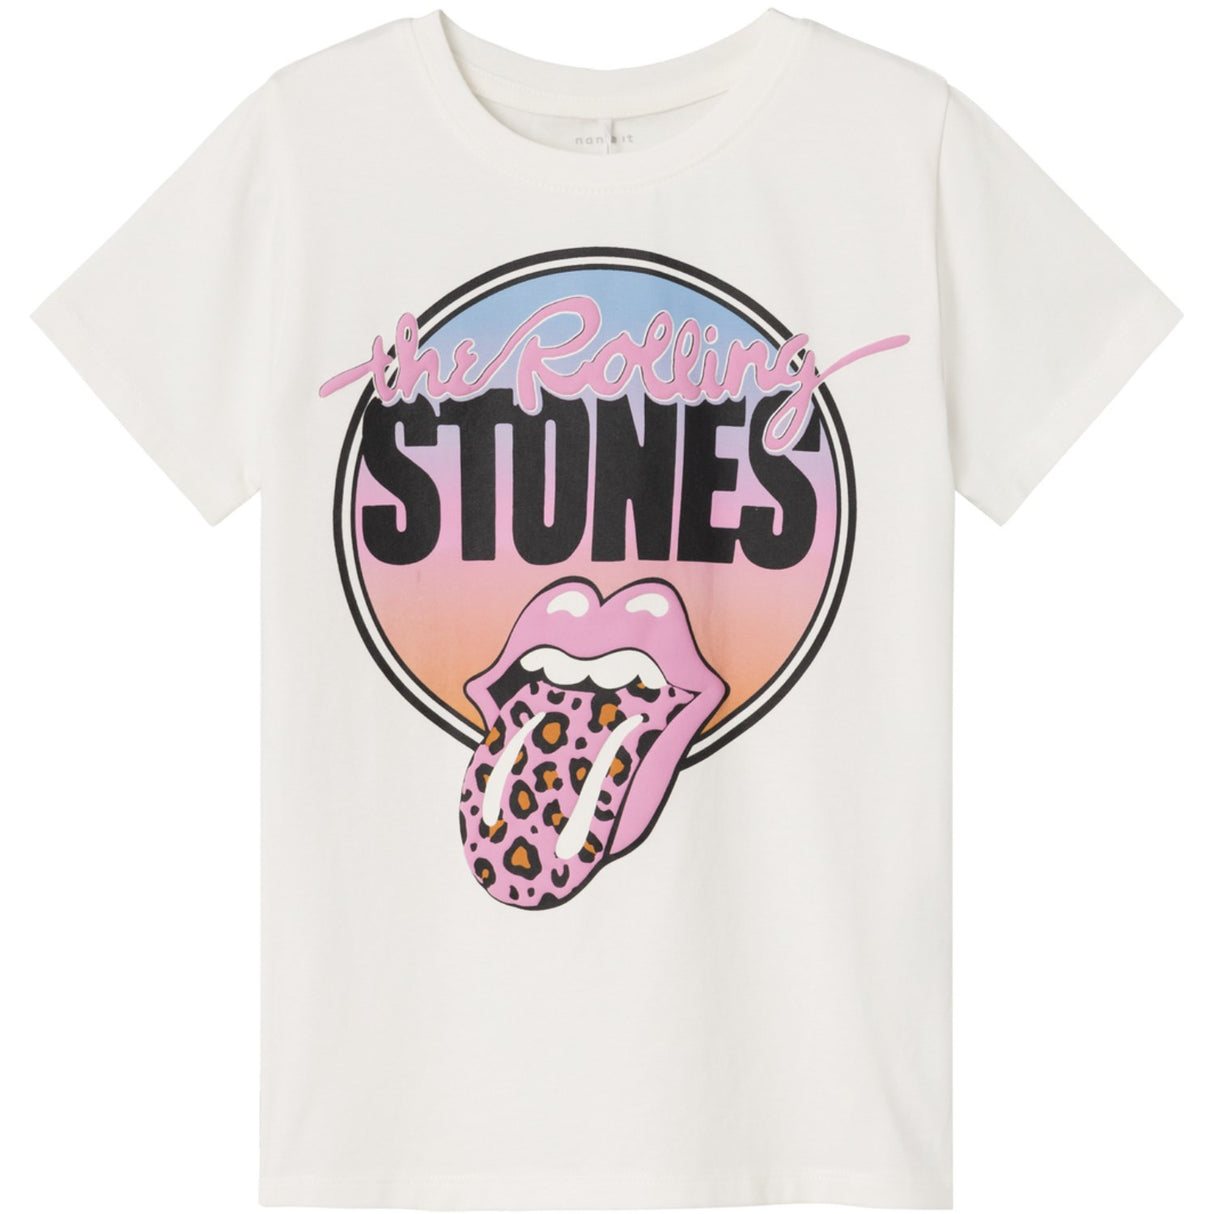 Name It Jet Stream Jaxari Rolling Stones T-Shirt